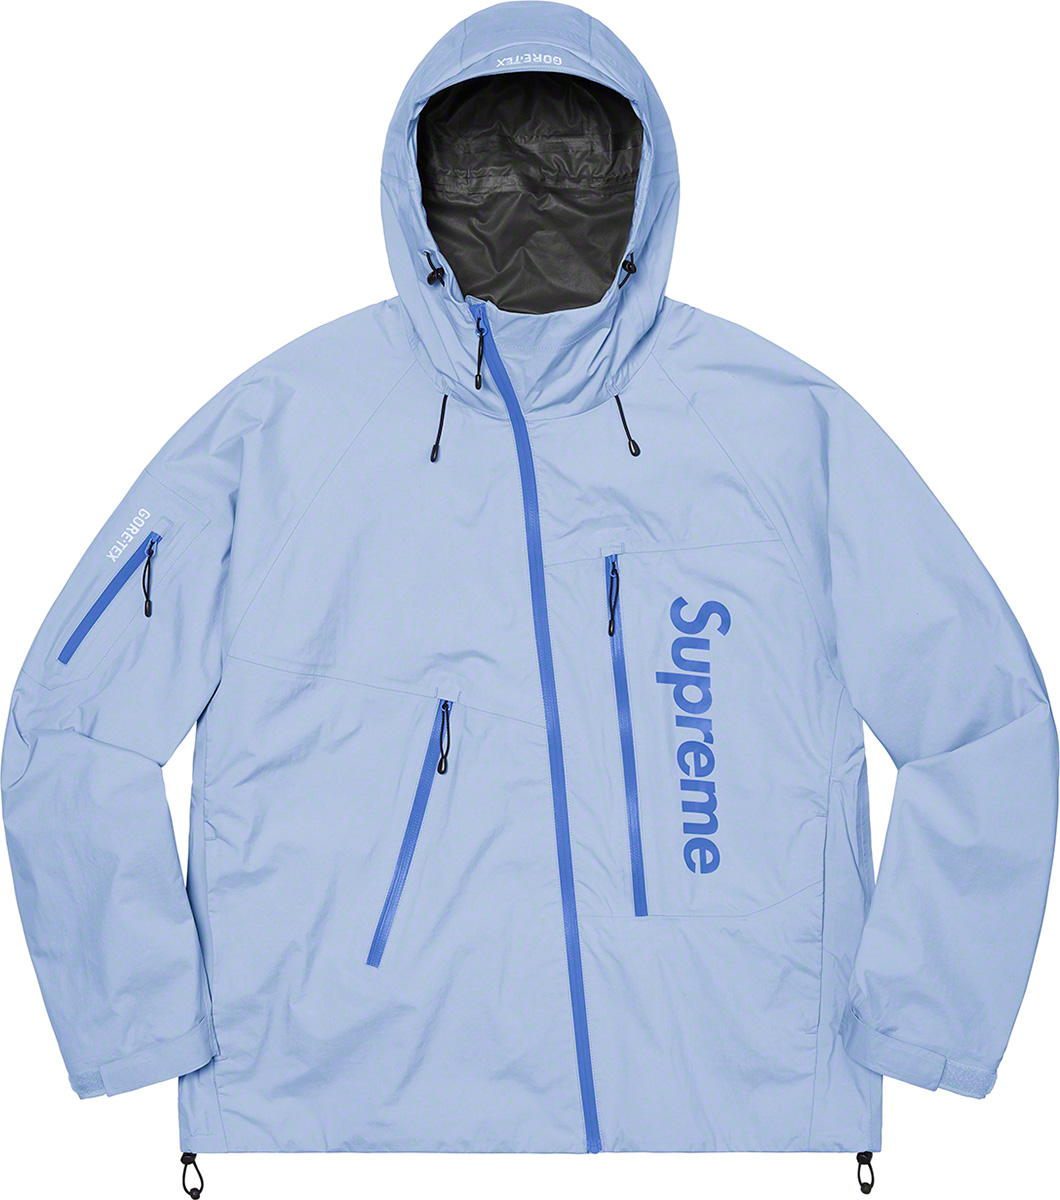 GORE-TEX Paclite Shell Jacket - spring summer 2021 - Supreme